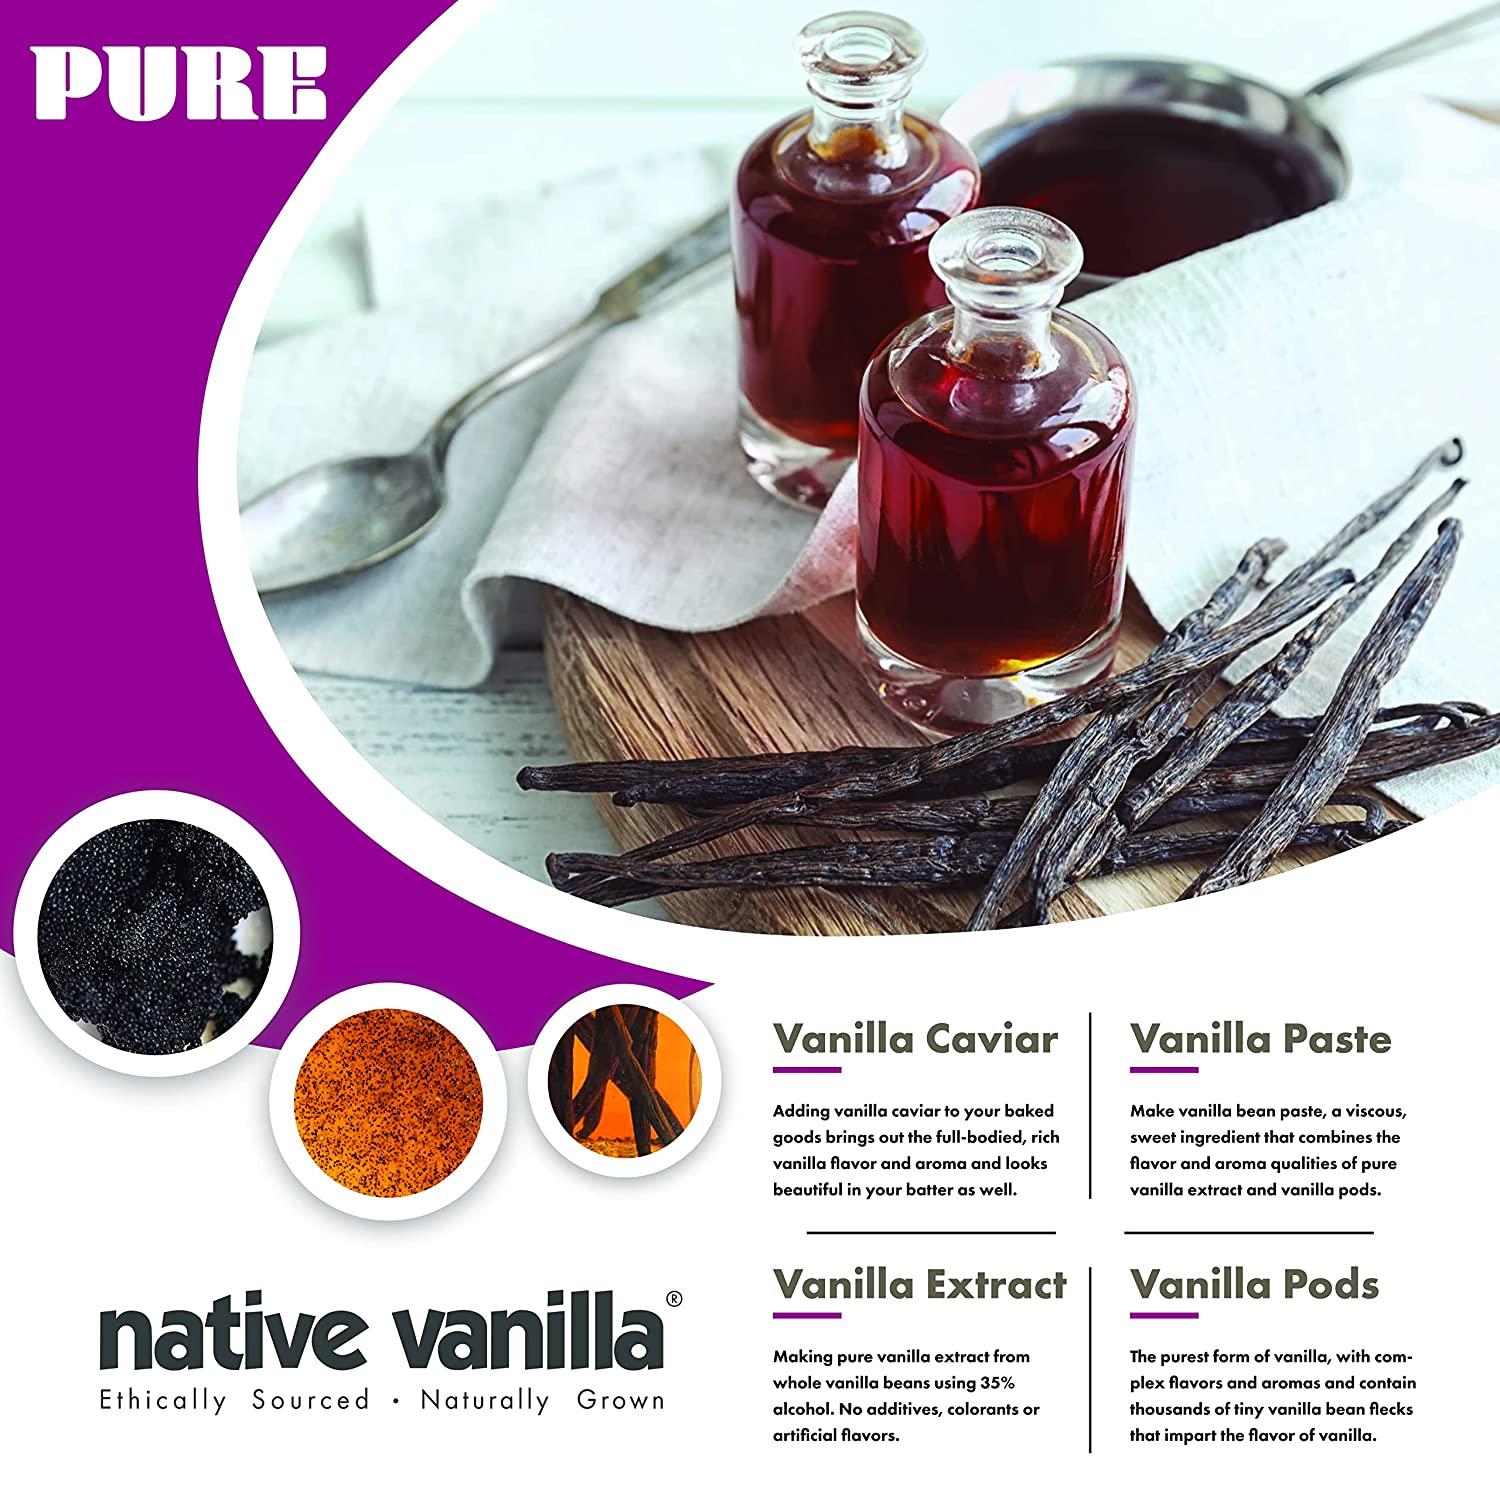 Tahitian Vanilla Pure Aromatic Oil Blend